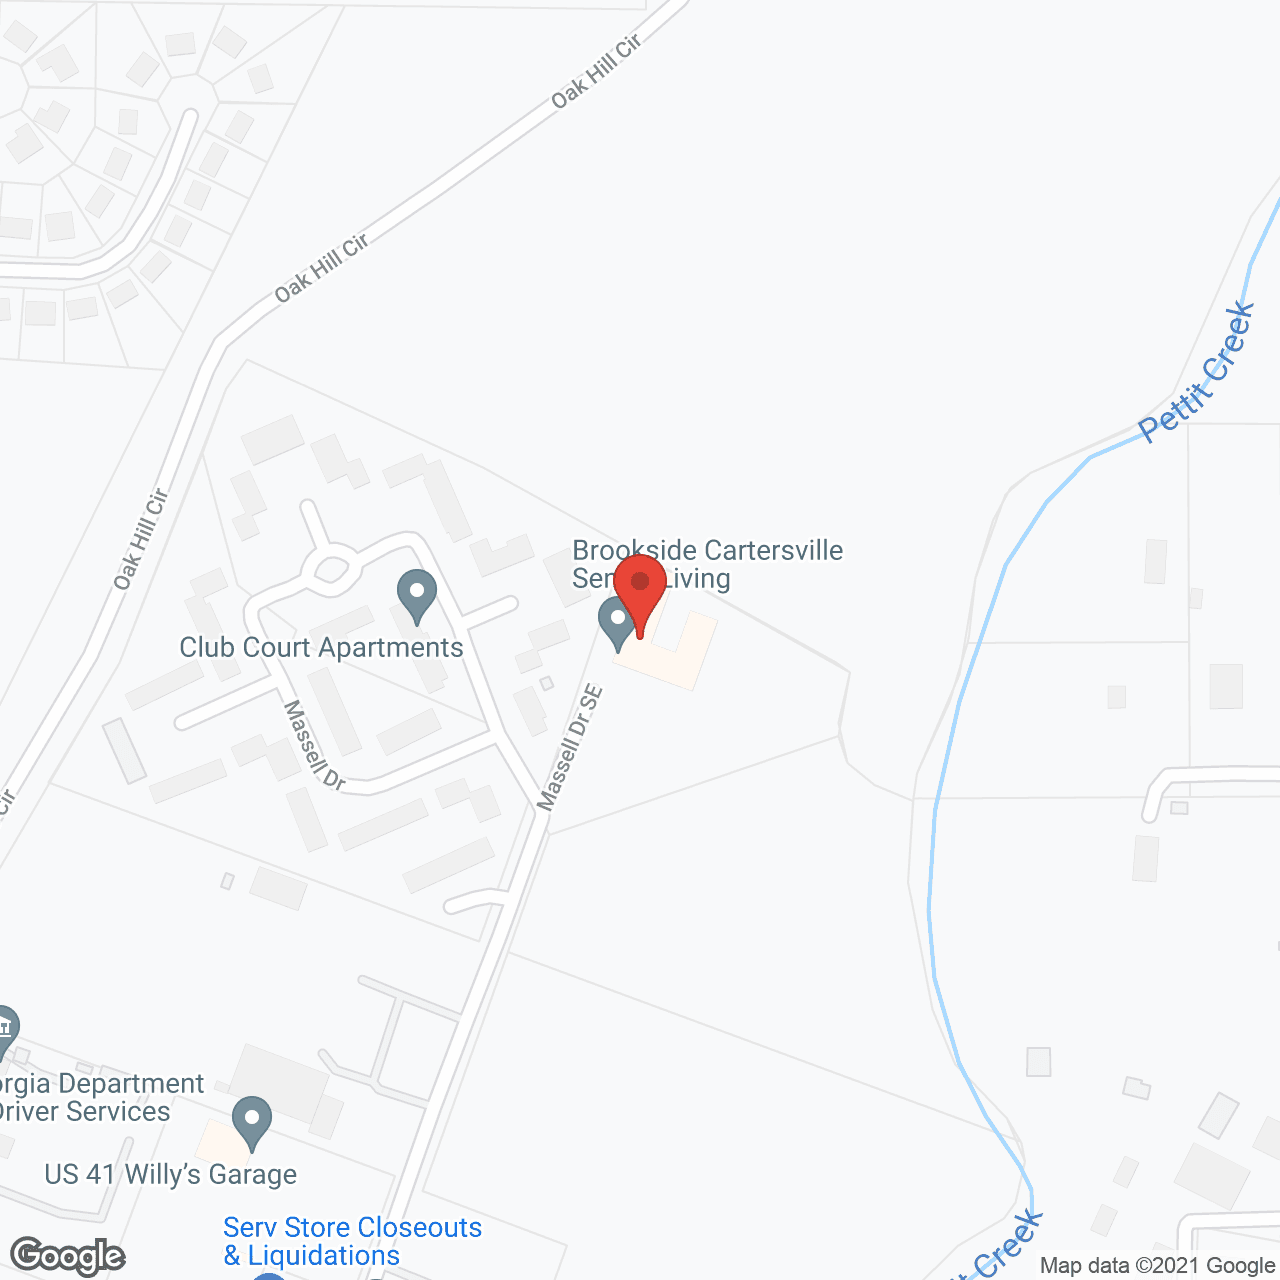 Brookside Cartersville in google map